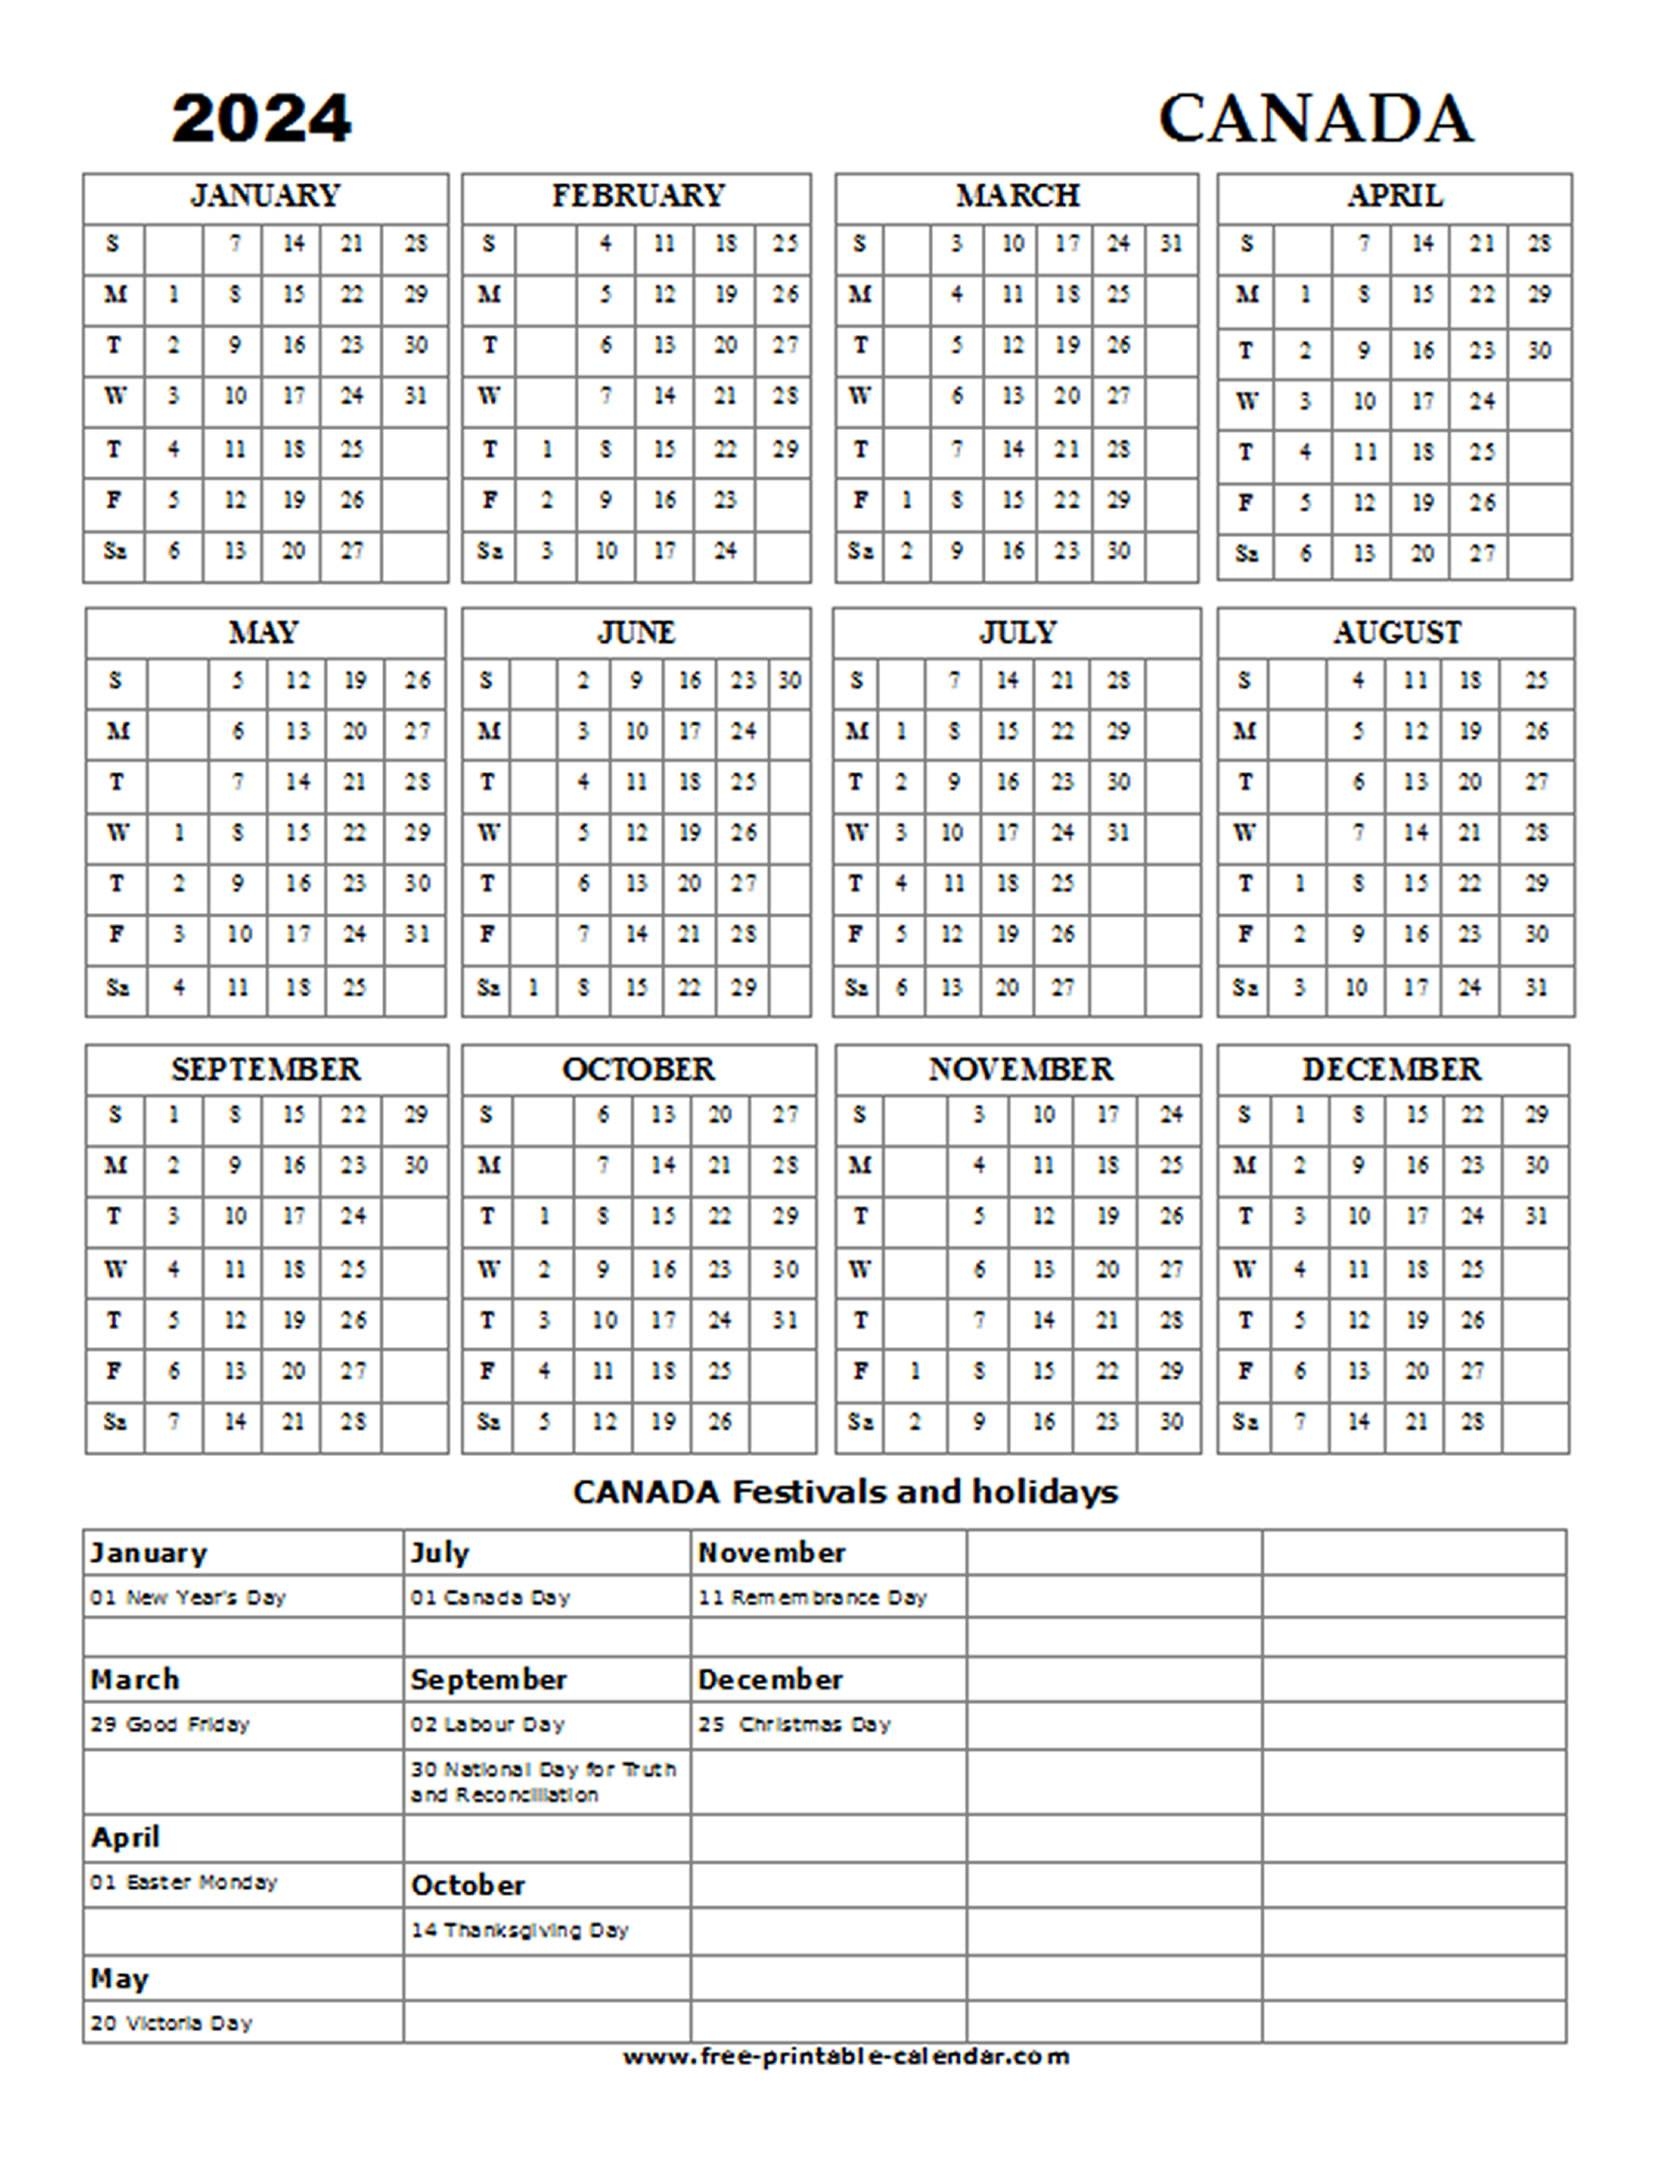 2024 Canada Holiday Calendar - Free-Printable-Calendar for Free Printable Calendar 2024 Canada Monthly